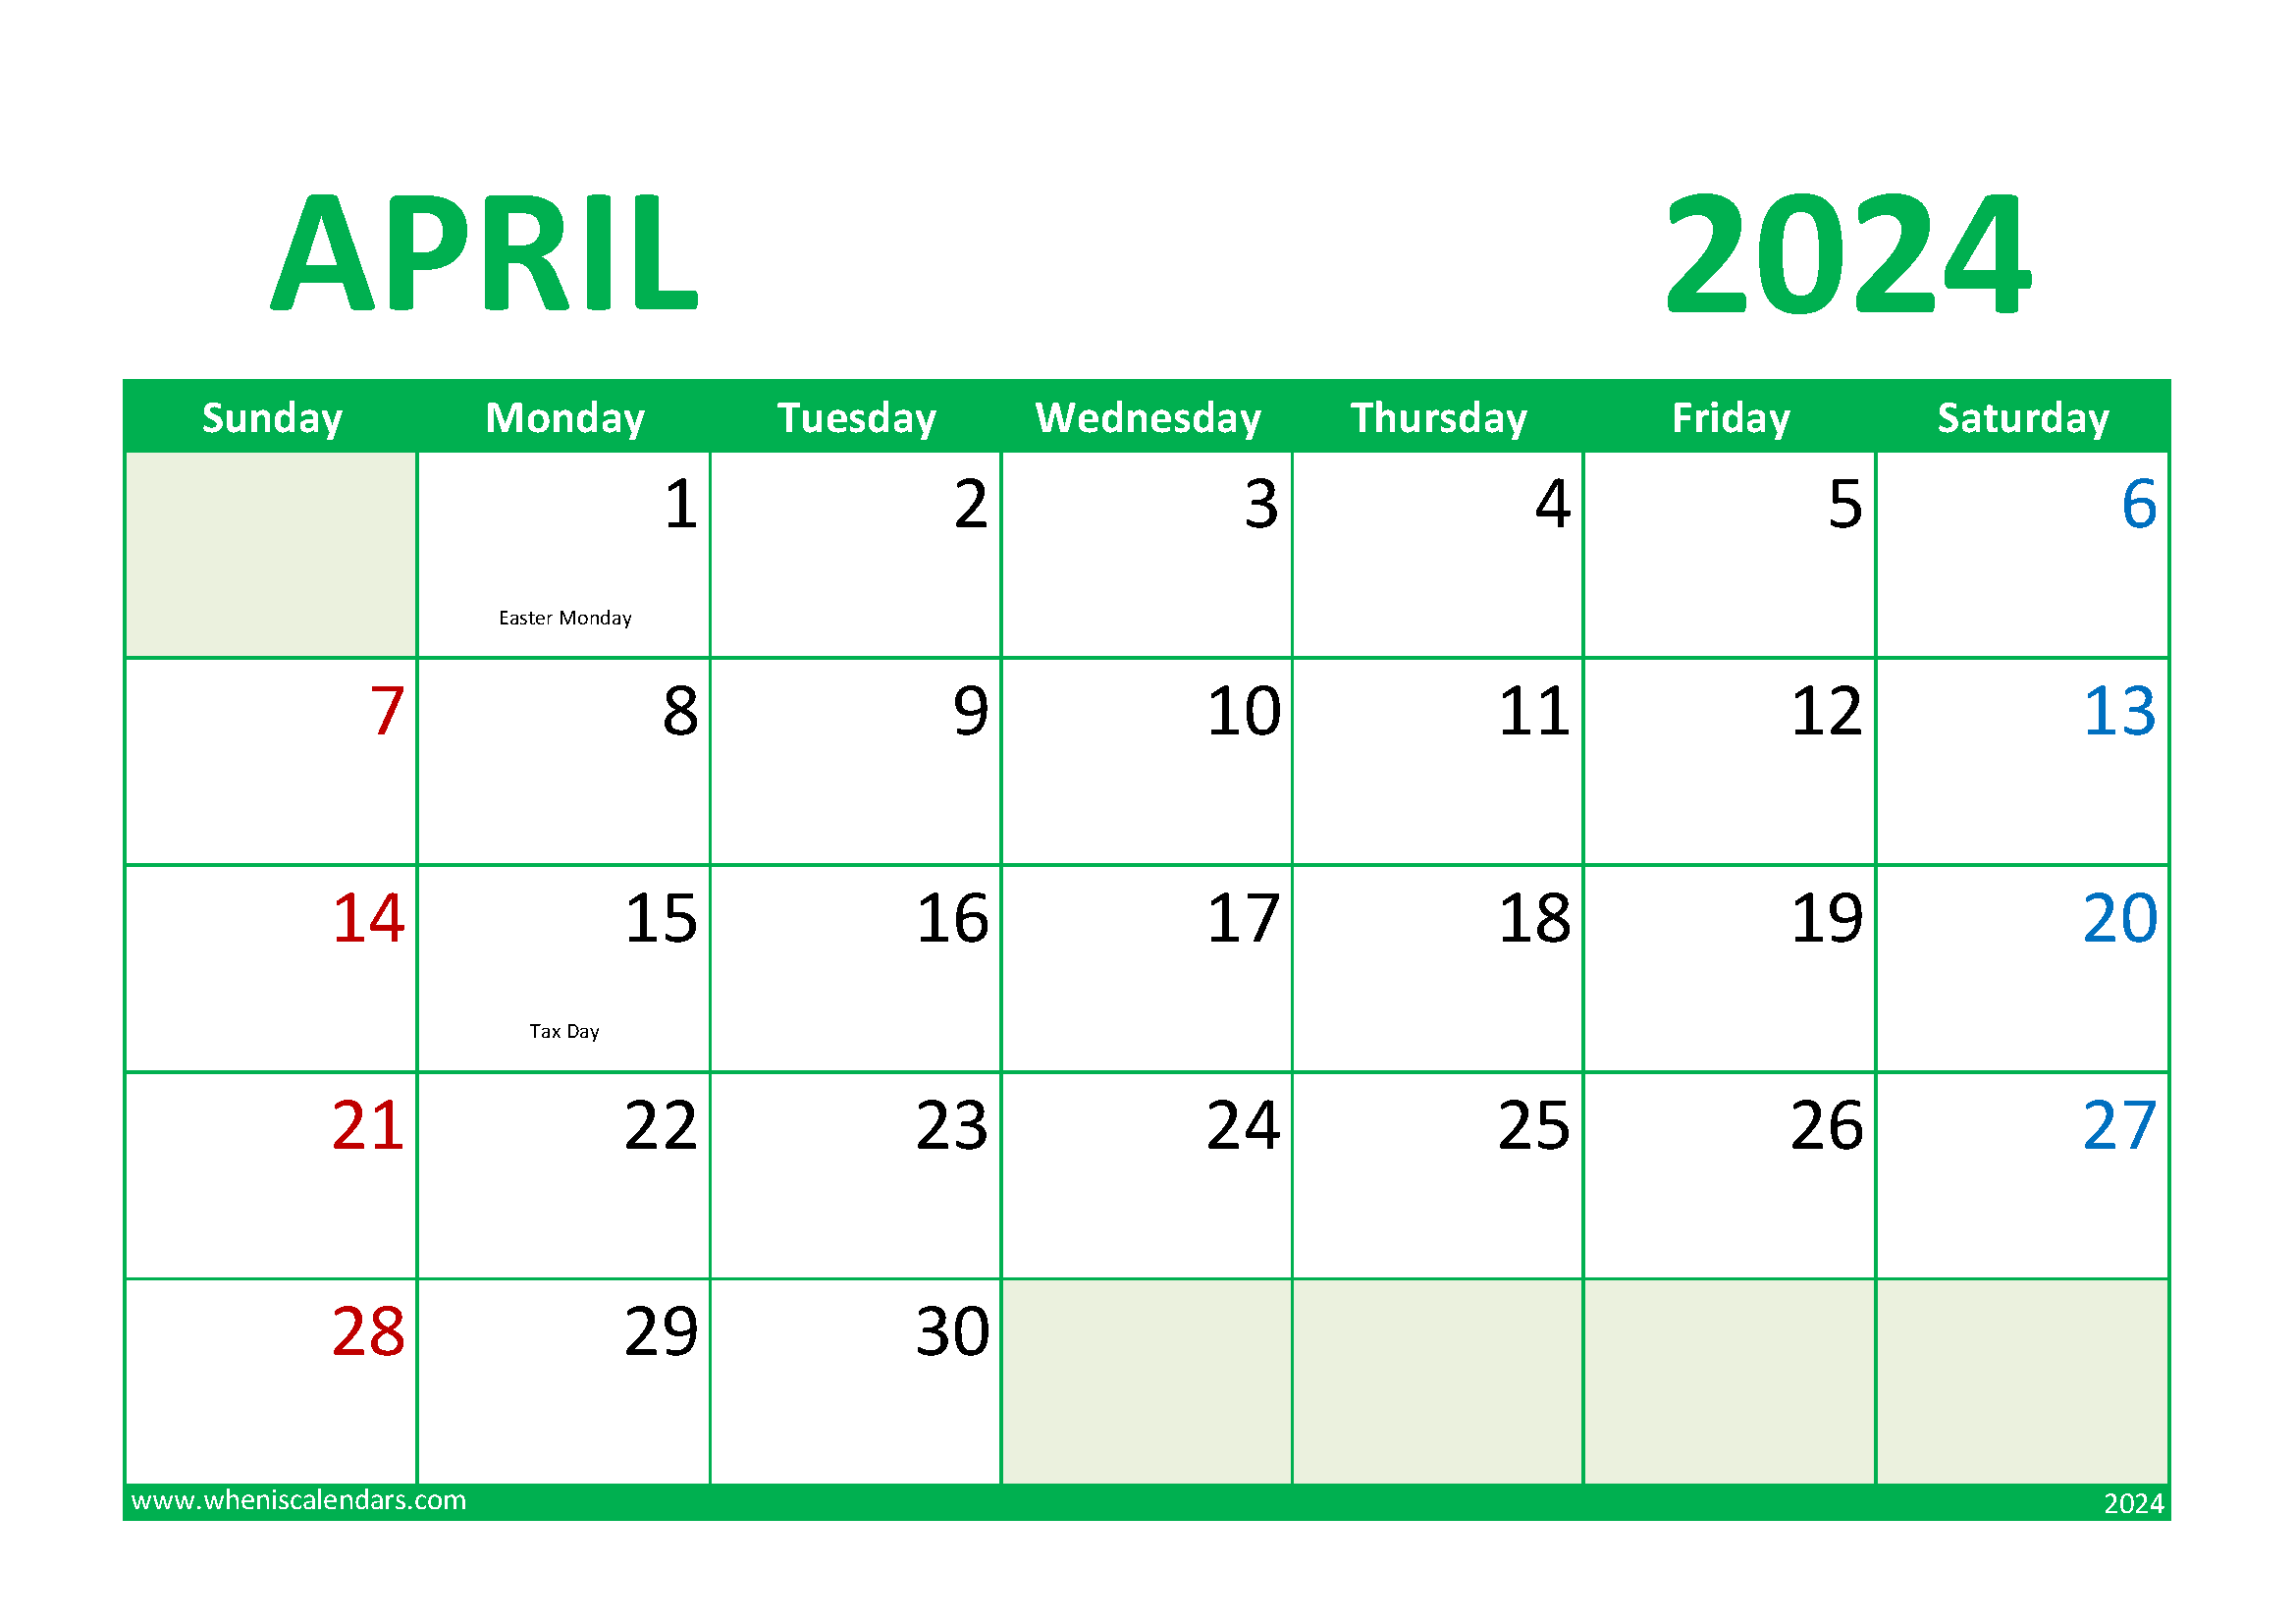 2024 Monthly Calendar Template Word